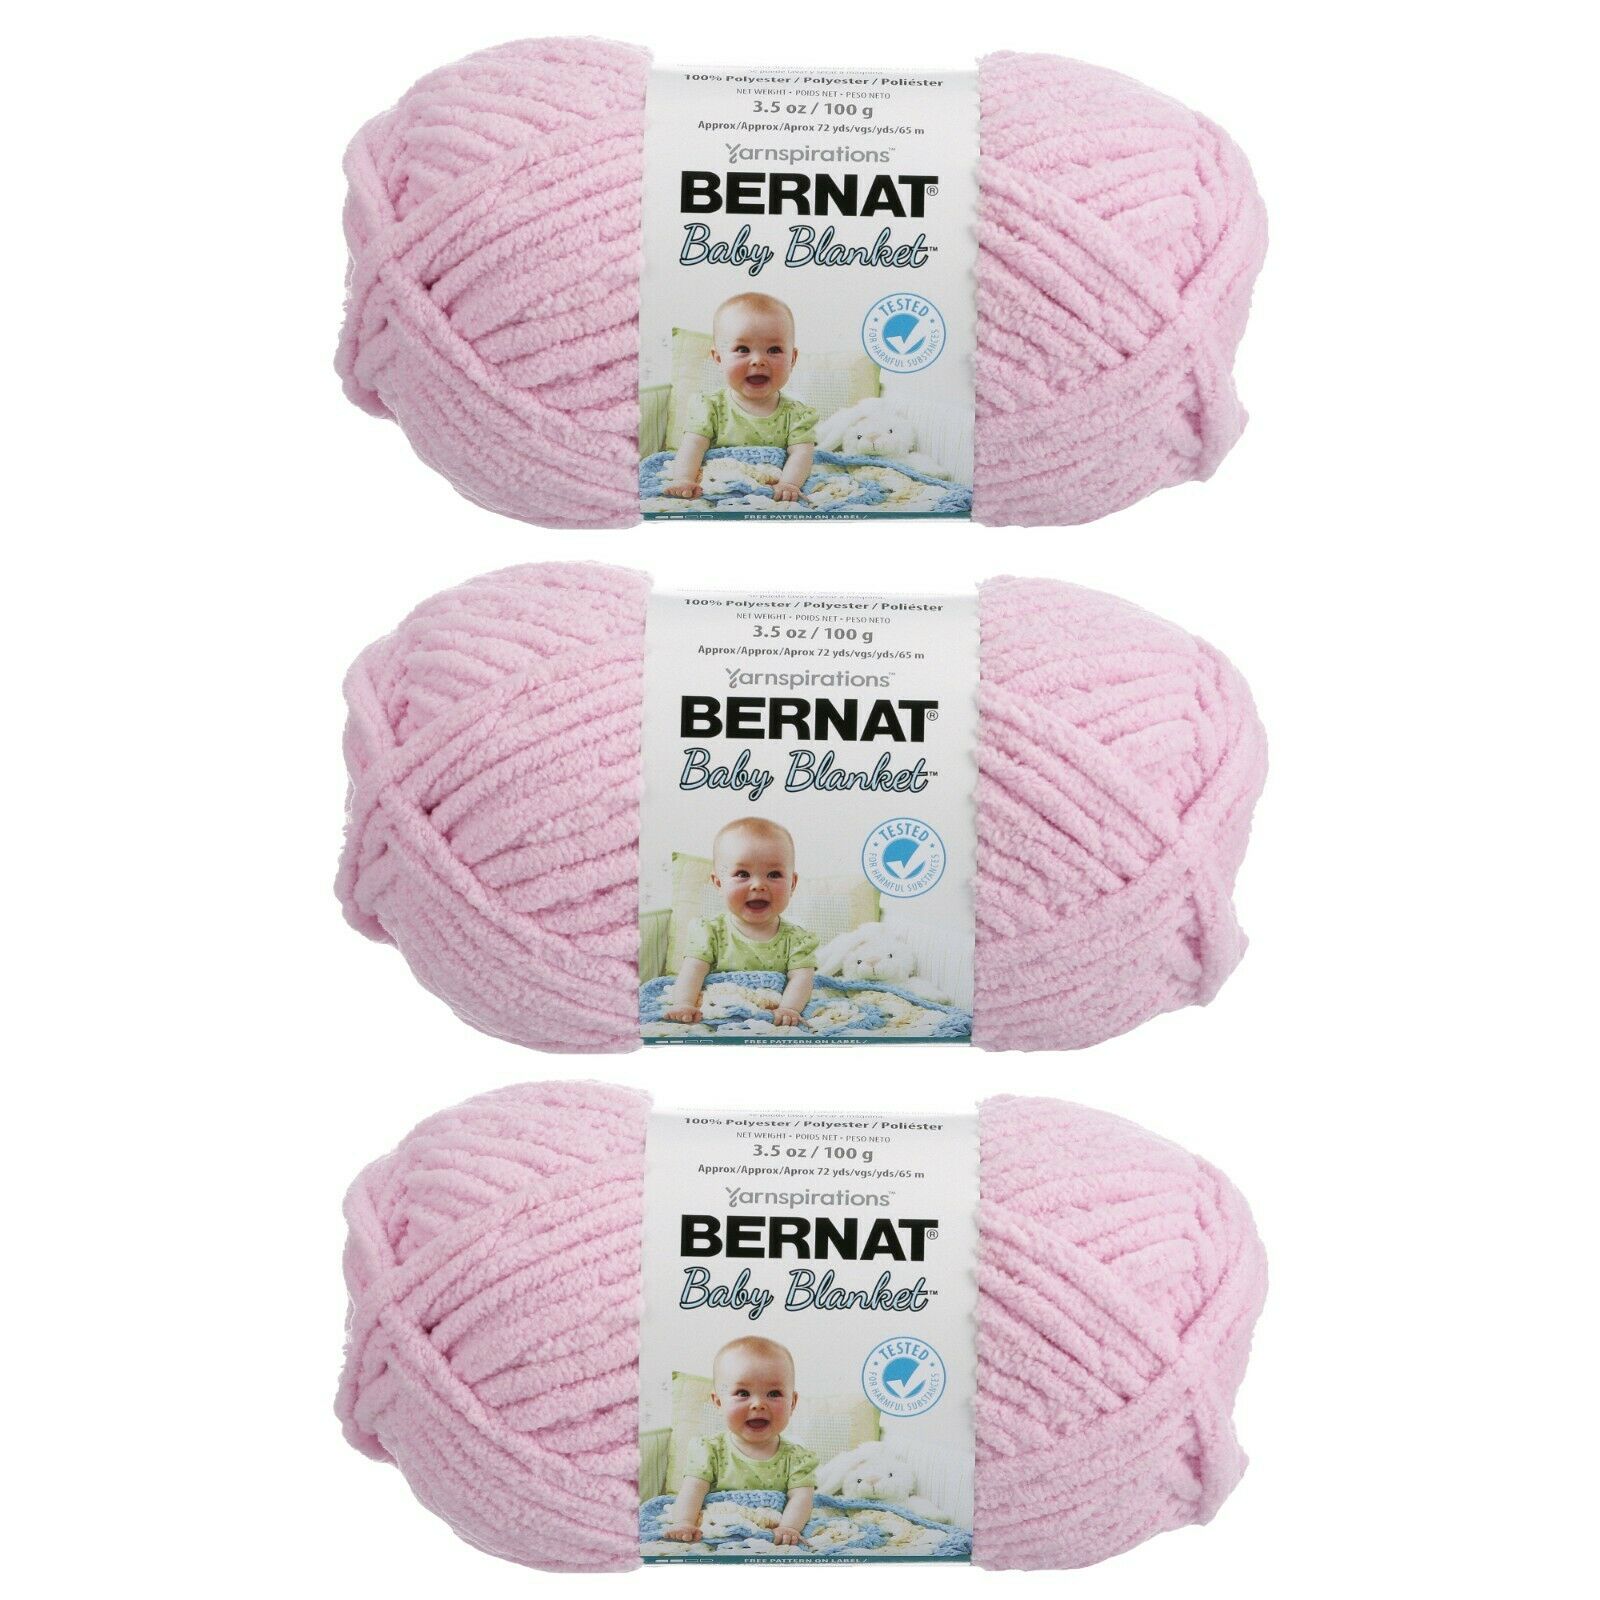 Bernat Baby Blanket Yarn (100g/3.5 Oz) Gauge 6 Super Bulky - 3 Pack